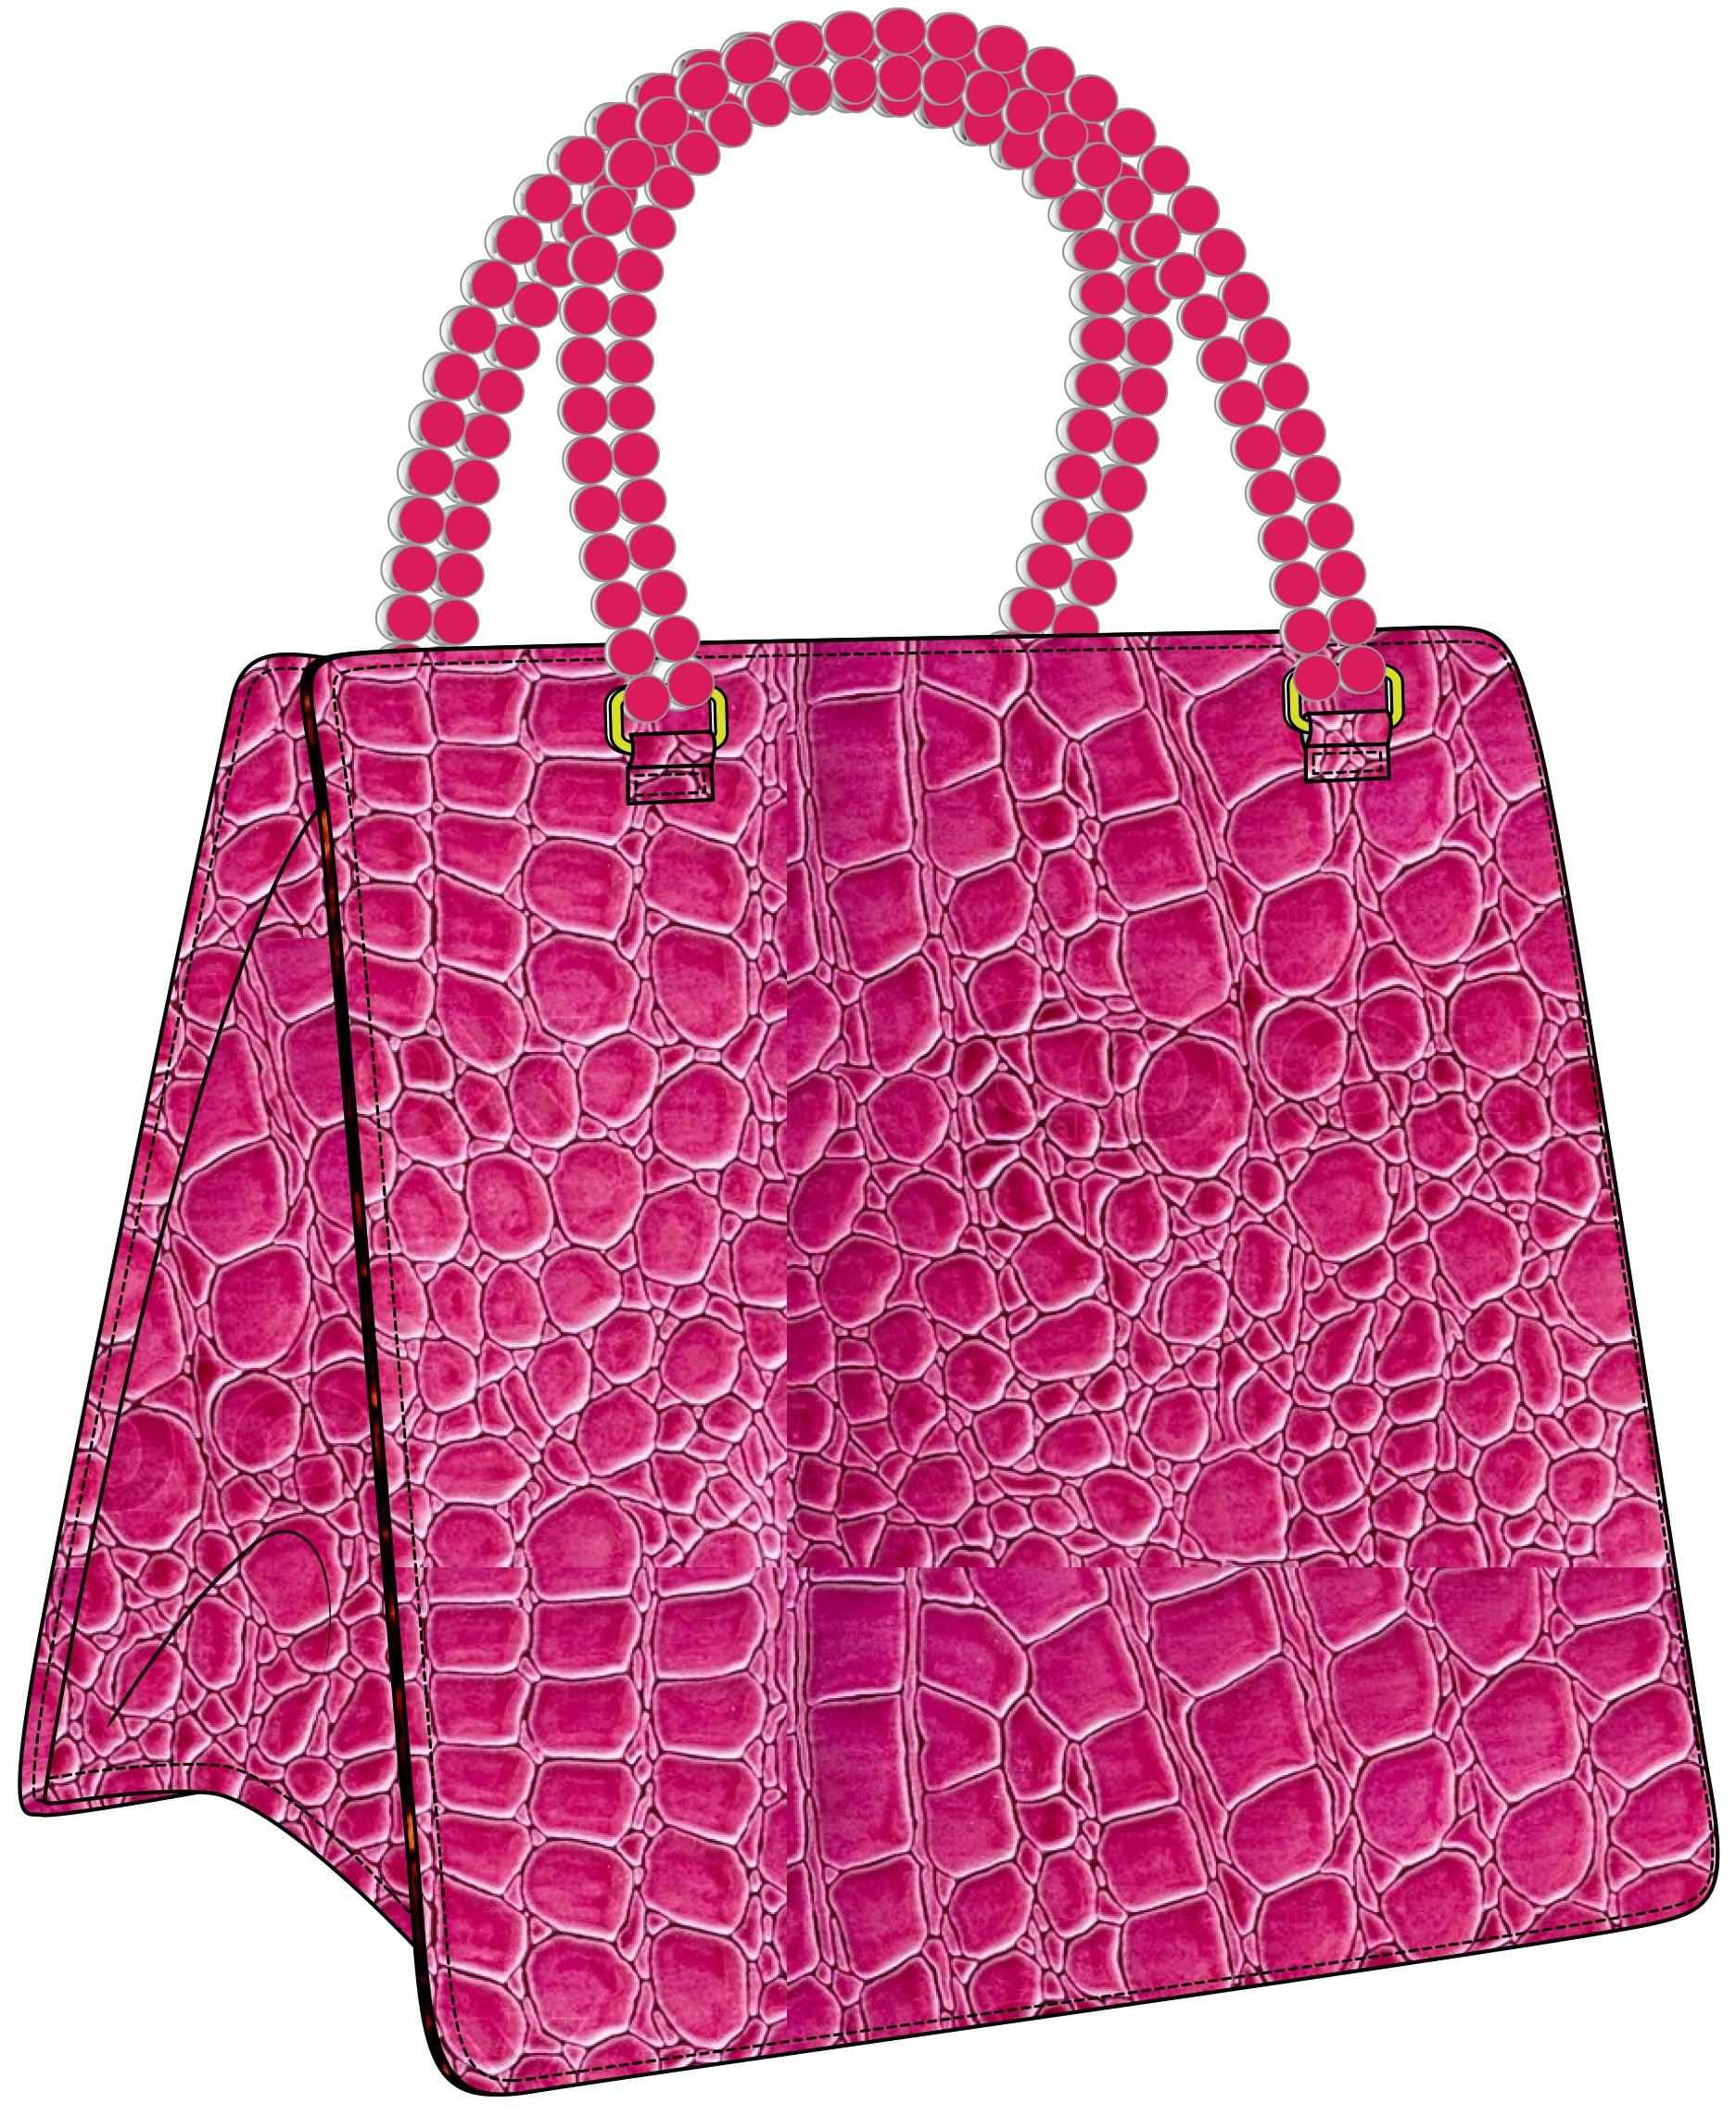 Mel Boteri's First Open Call Handbag Design Competition | Finalizing Materials 6